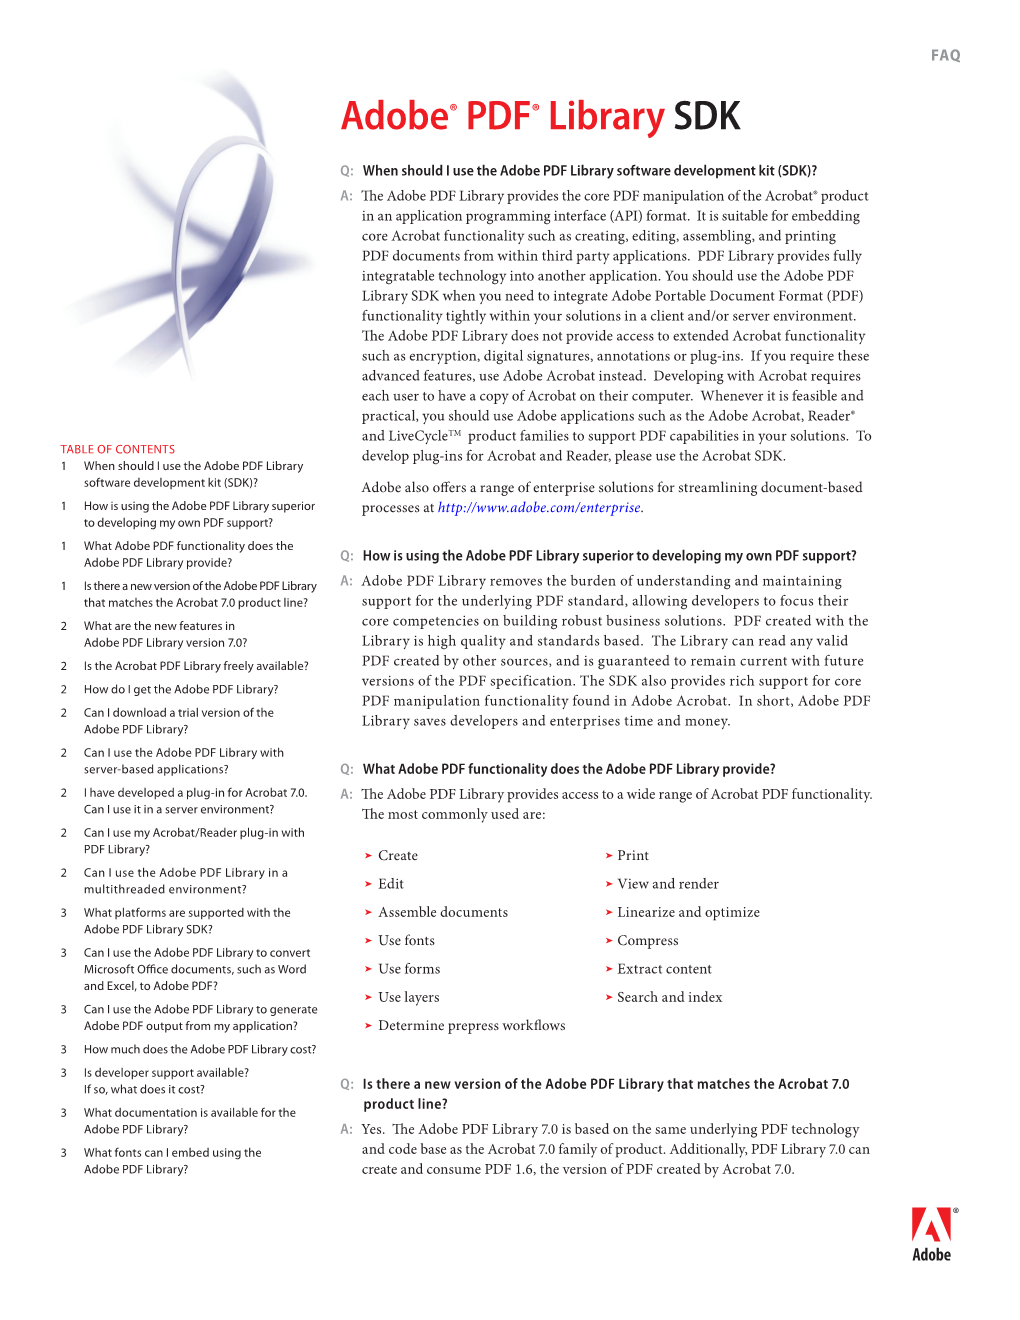 Adobe PDF Library SDK FAQ.Indd